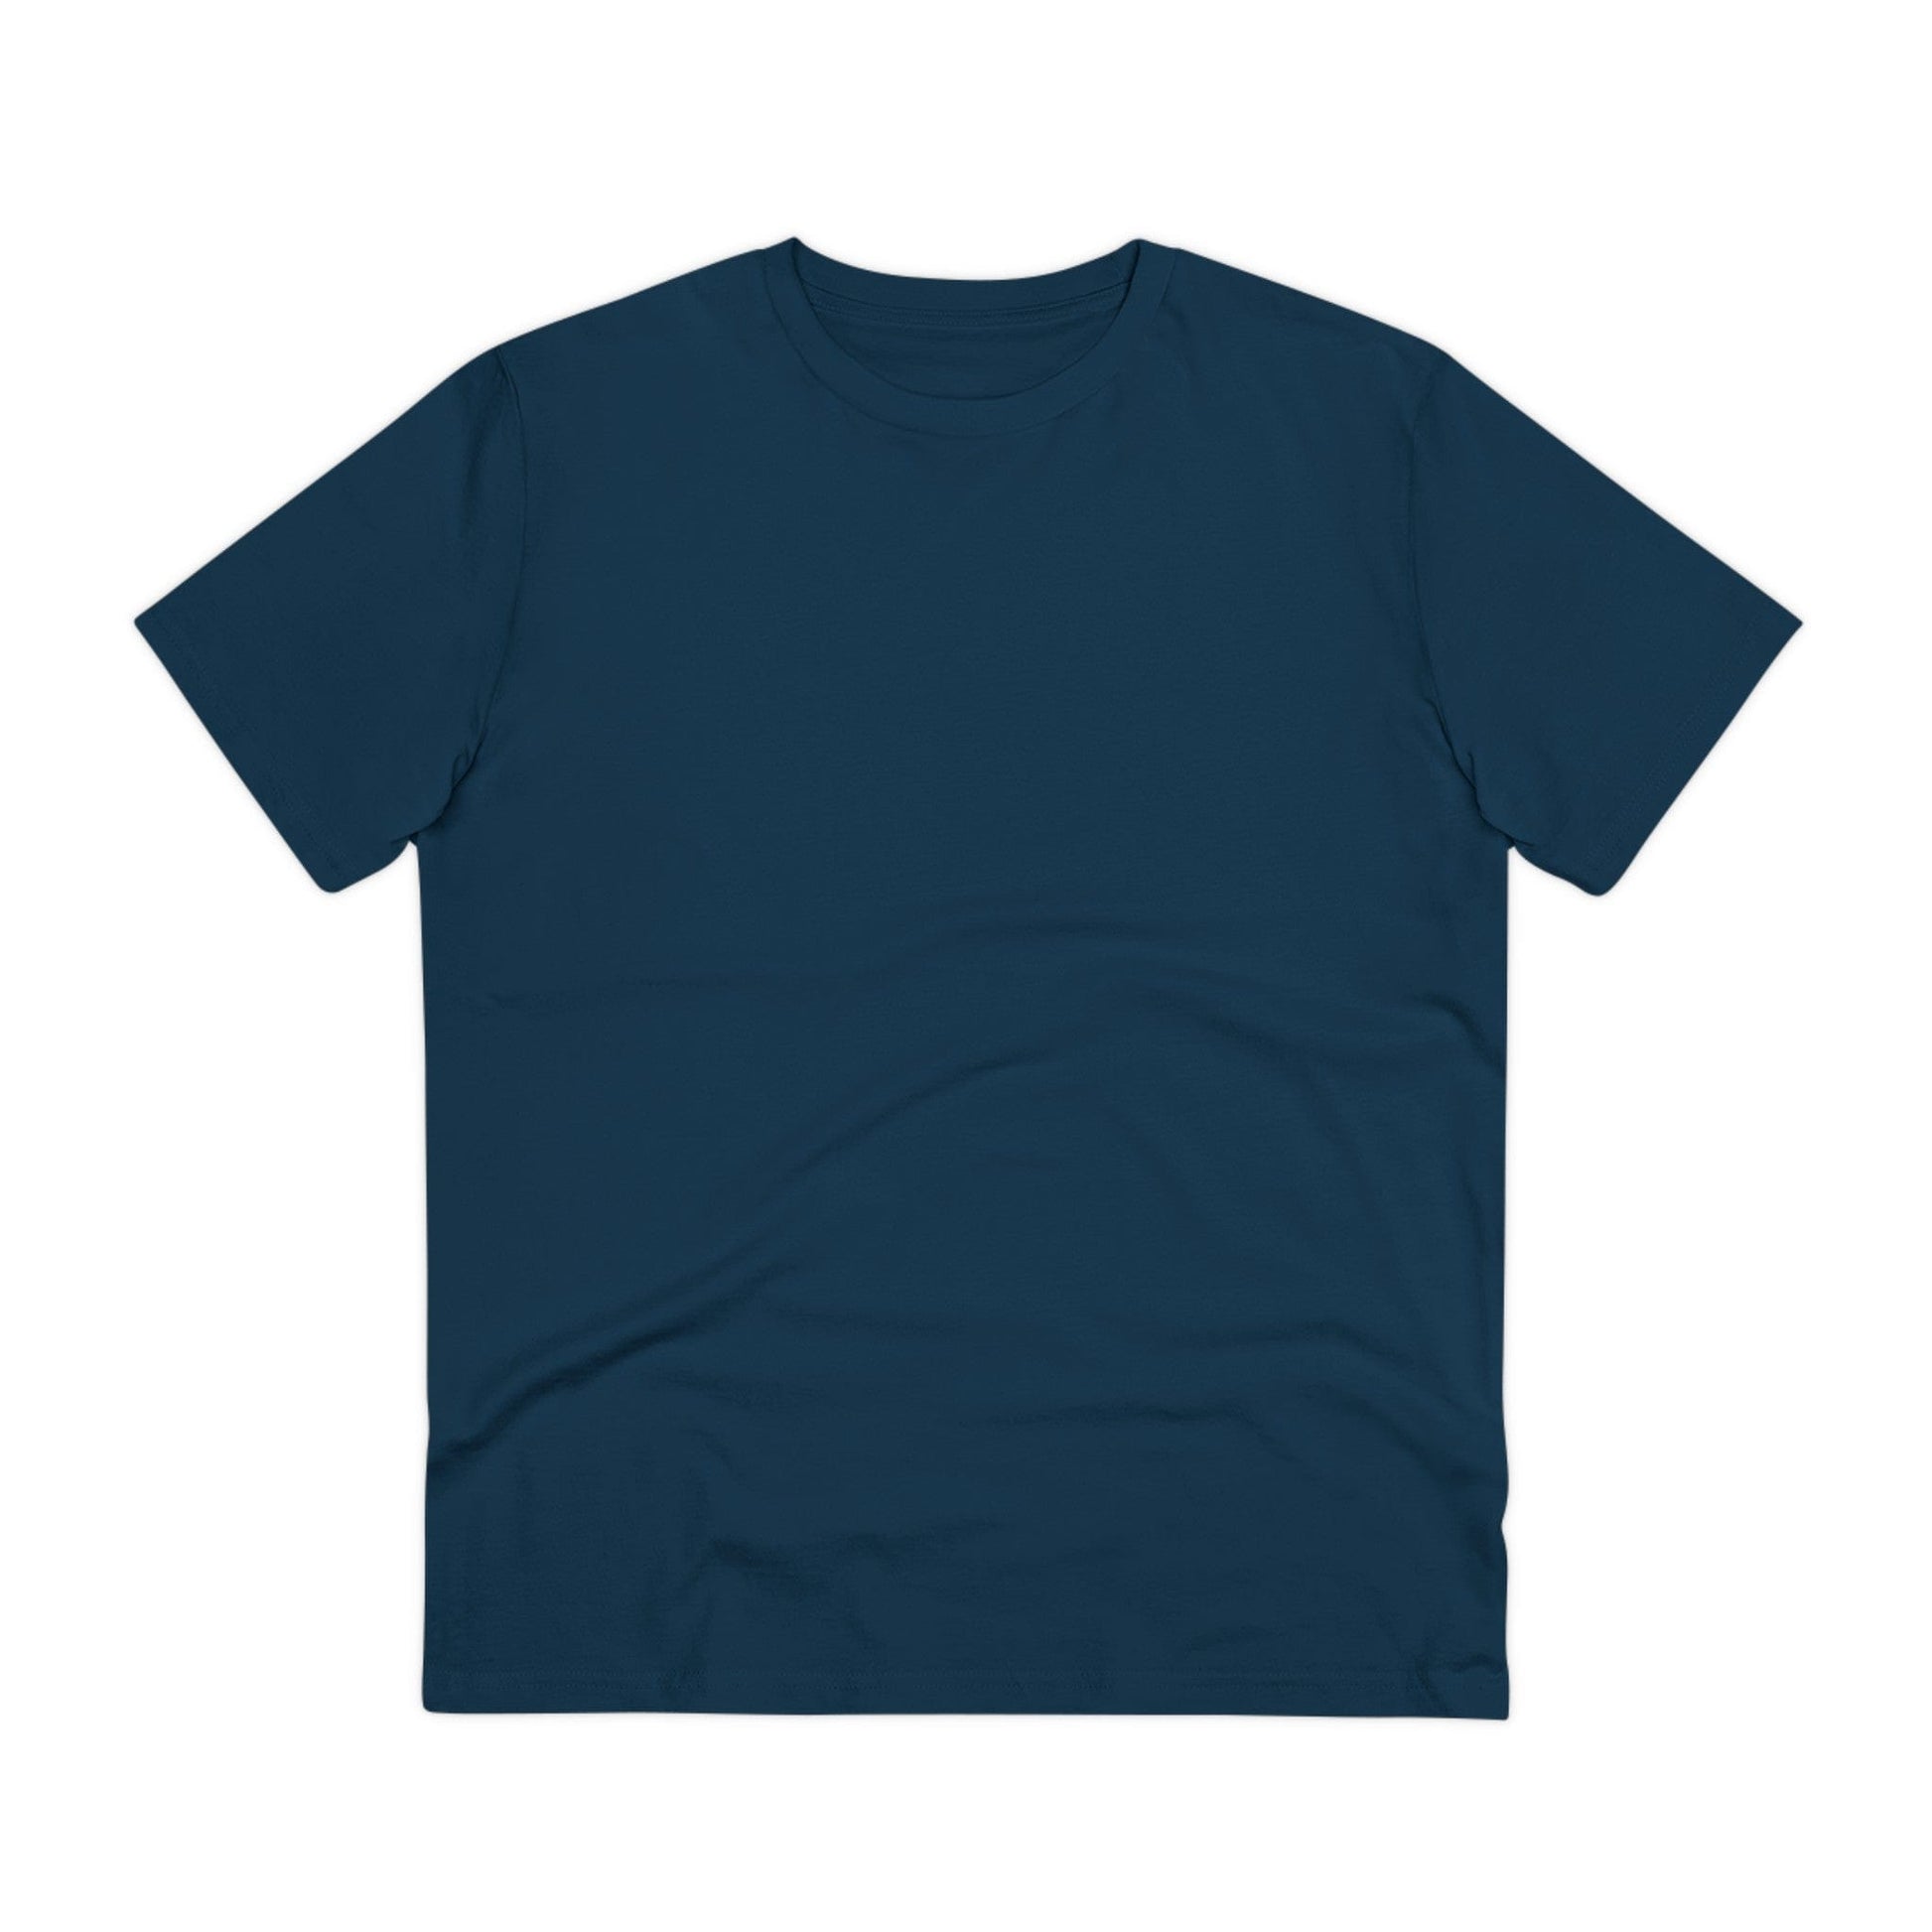 Printify T-Shirt Unicorn pee on Mountain - Unicorn World - Back Design